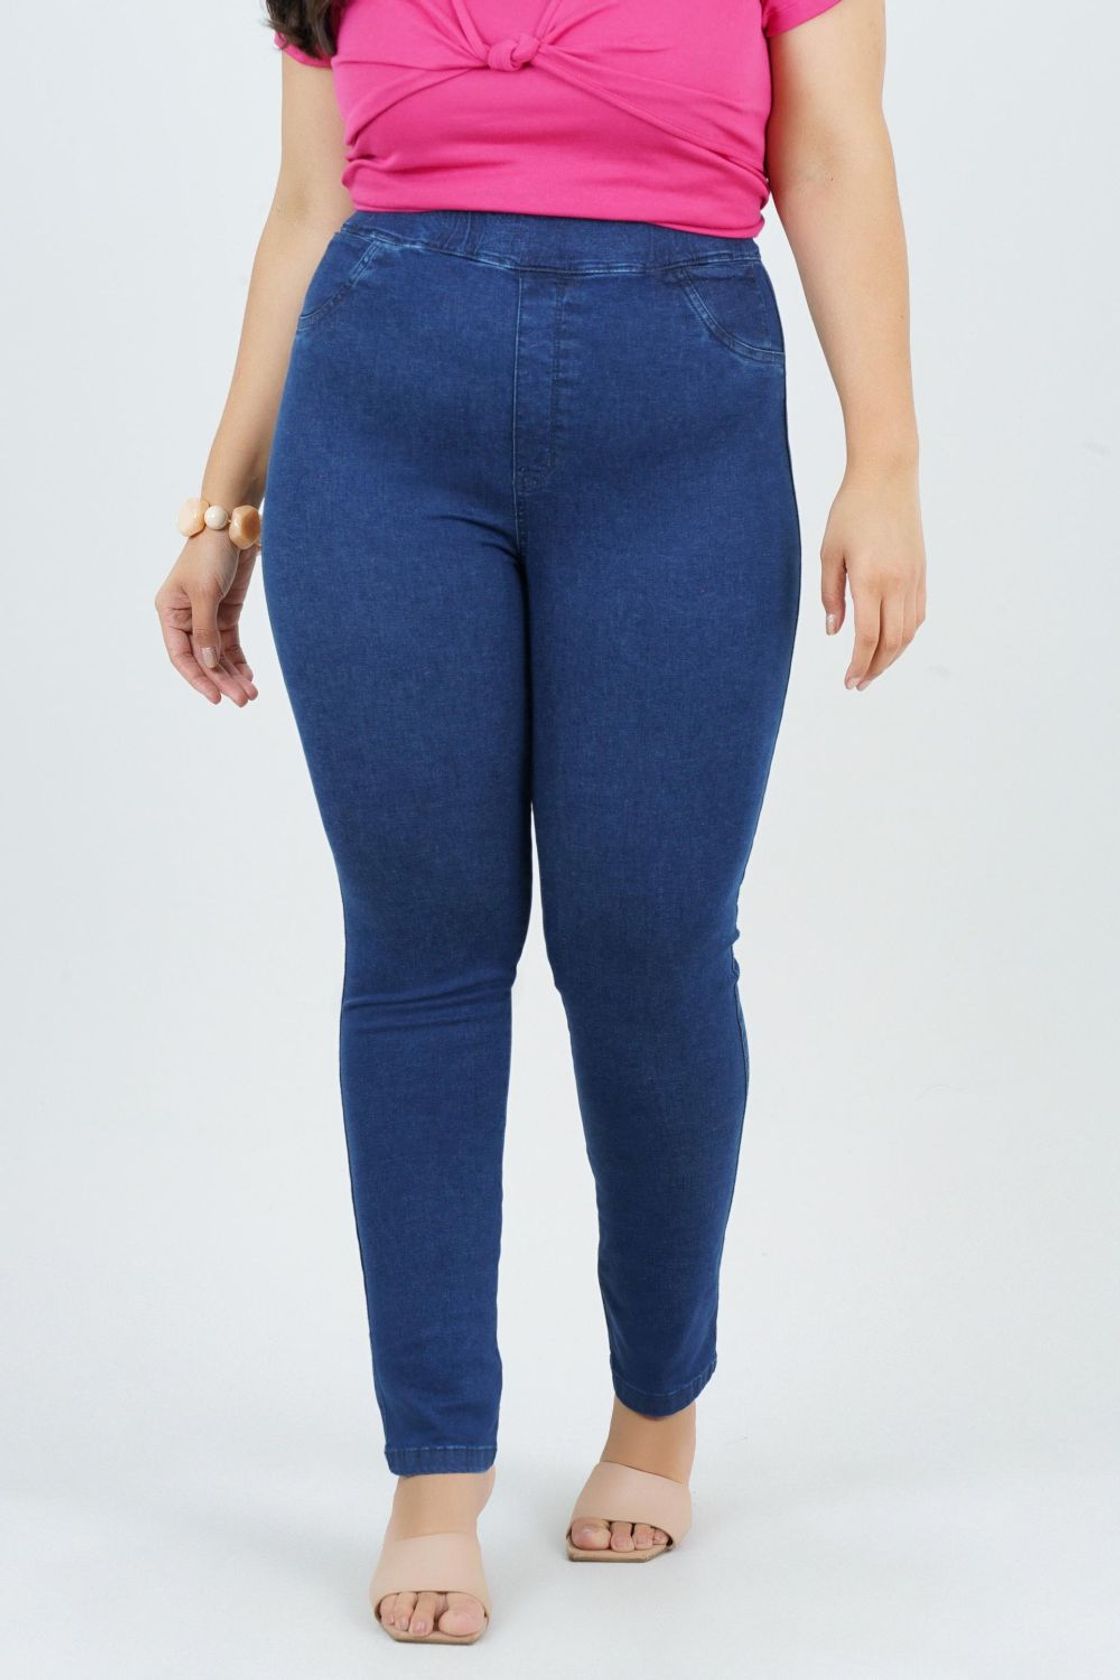 Calça Jegging Plus Size Shangri-La Jeans - Program Moda